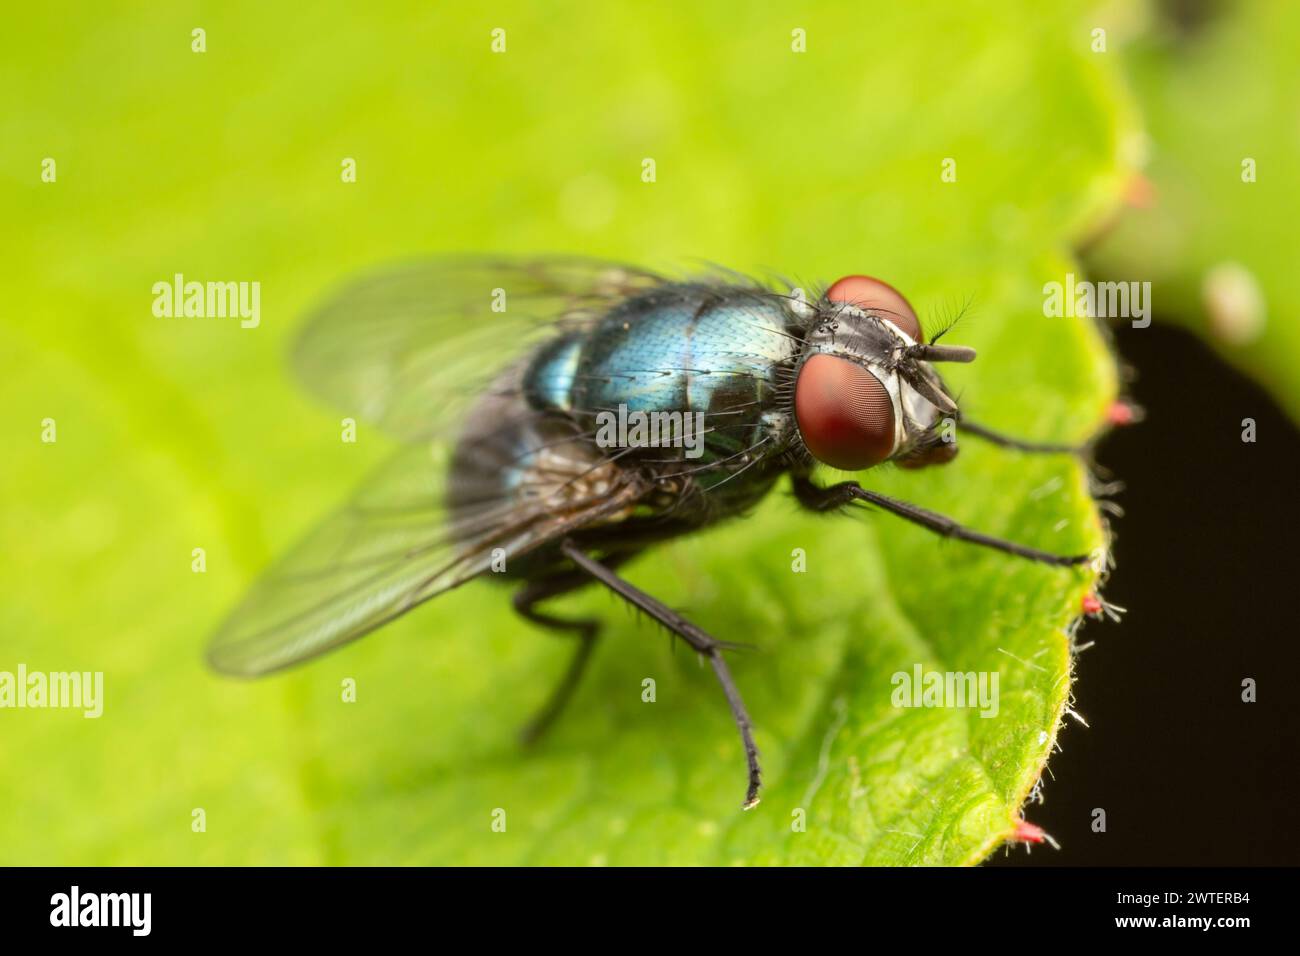 Common Green Bottle Fly (Lucilia sericata) Stock Photo